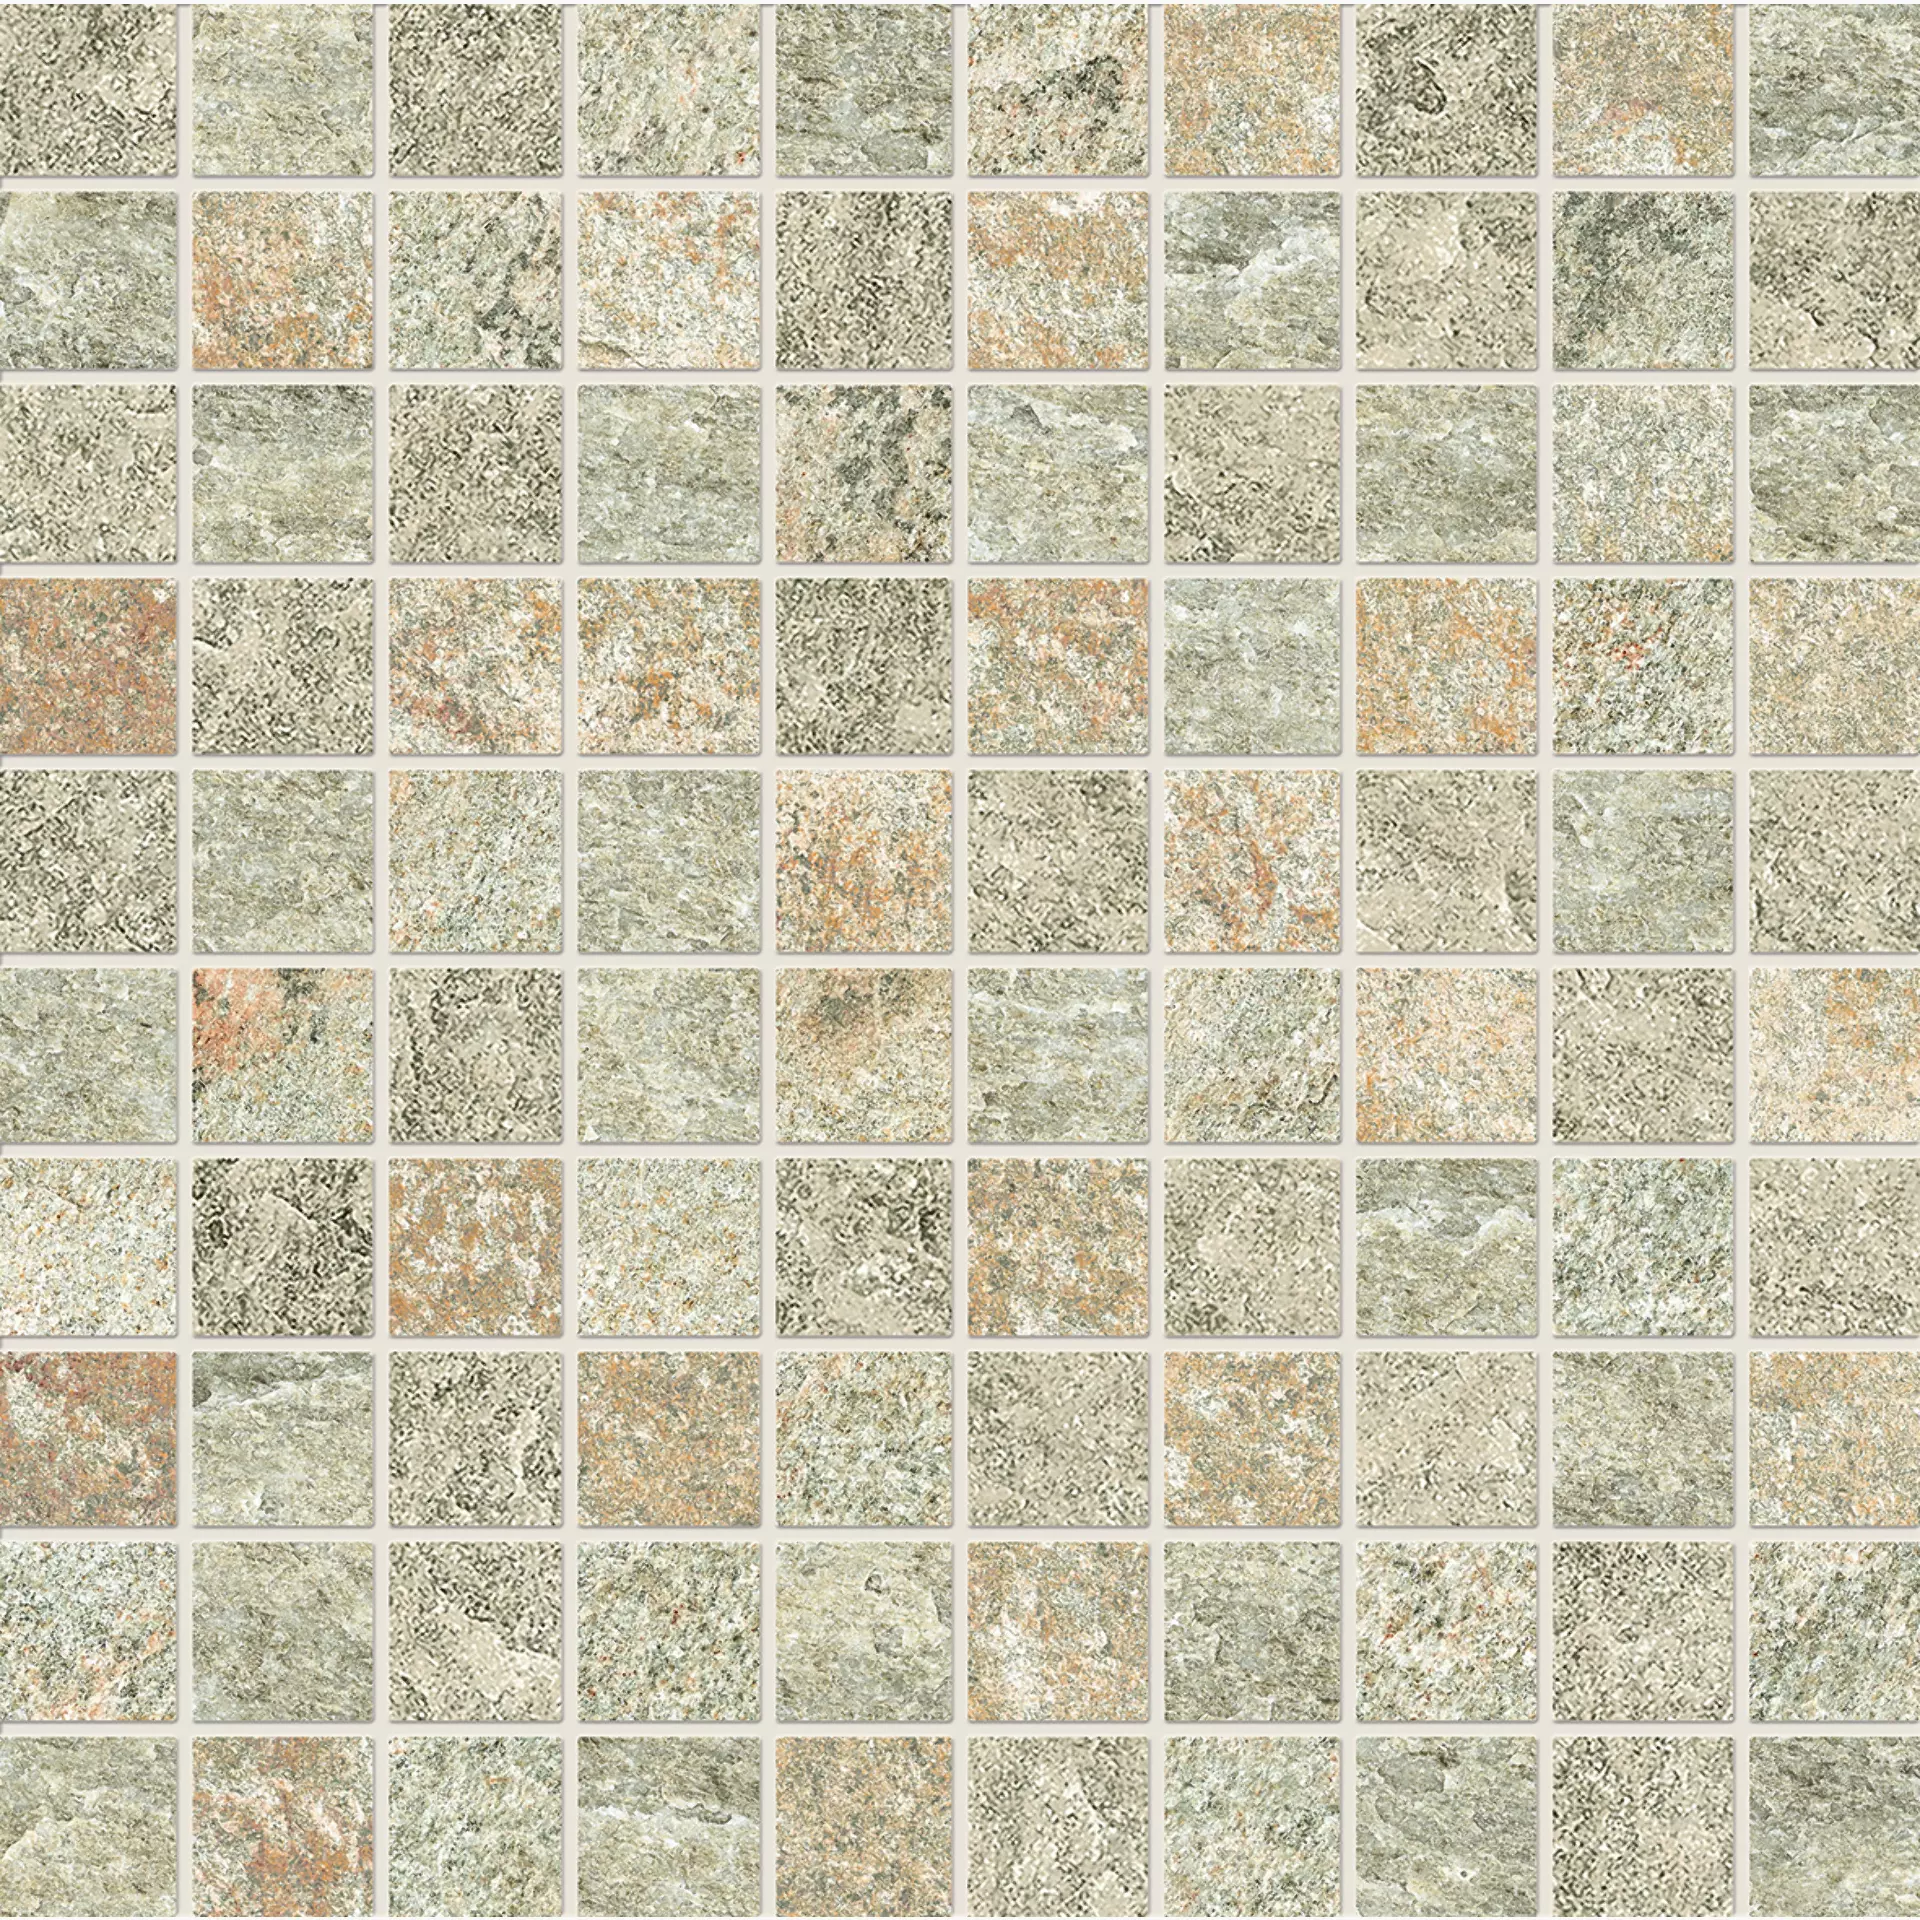 Ergon Oros Stone Sand Naturale Mosaic 3x3 EL1J 30x30cm 9,5mm